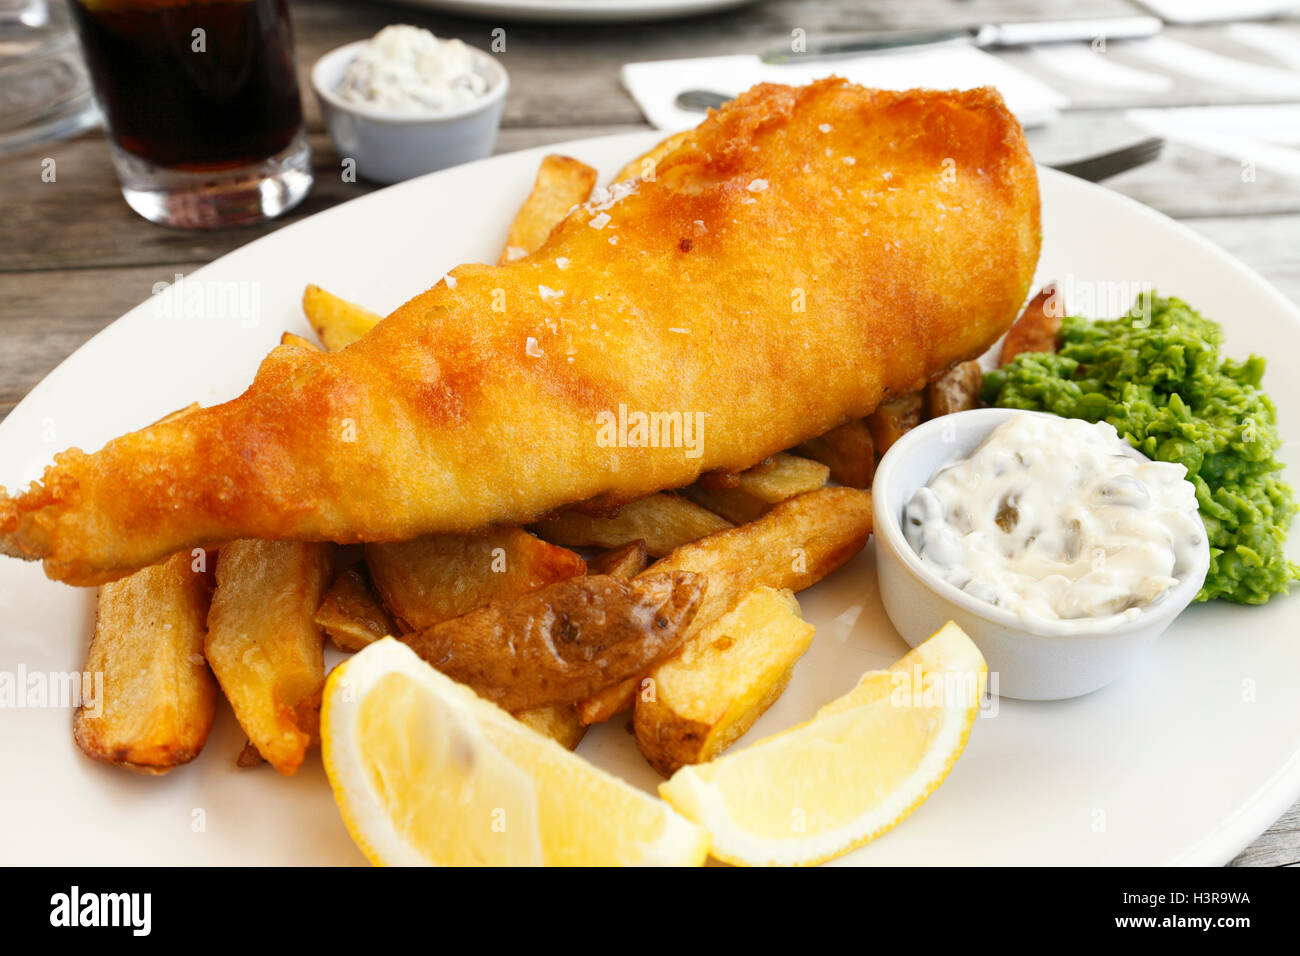 Restaurant fish and chips with tartar sauce, lemon and mushy peas. Stock Photo